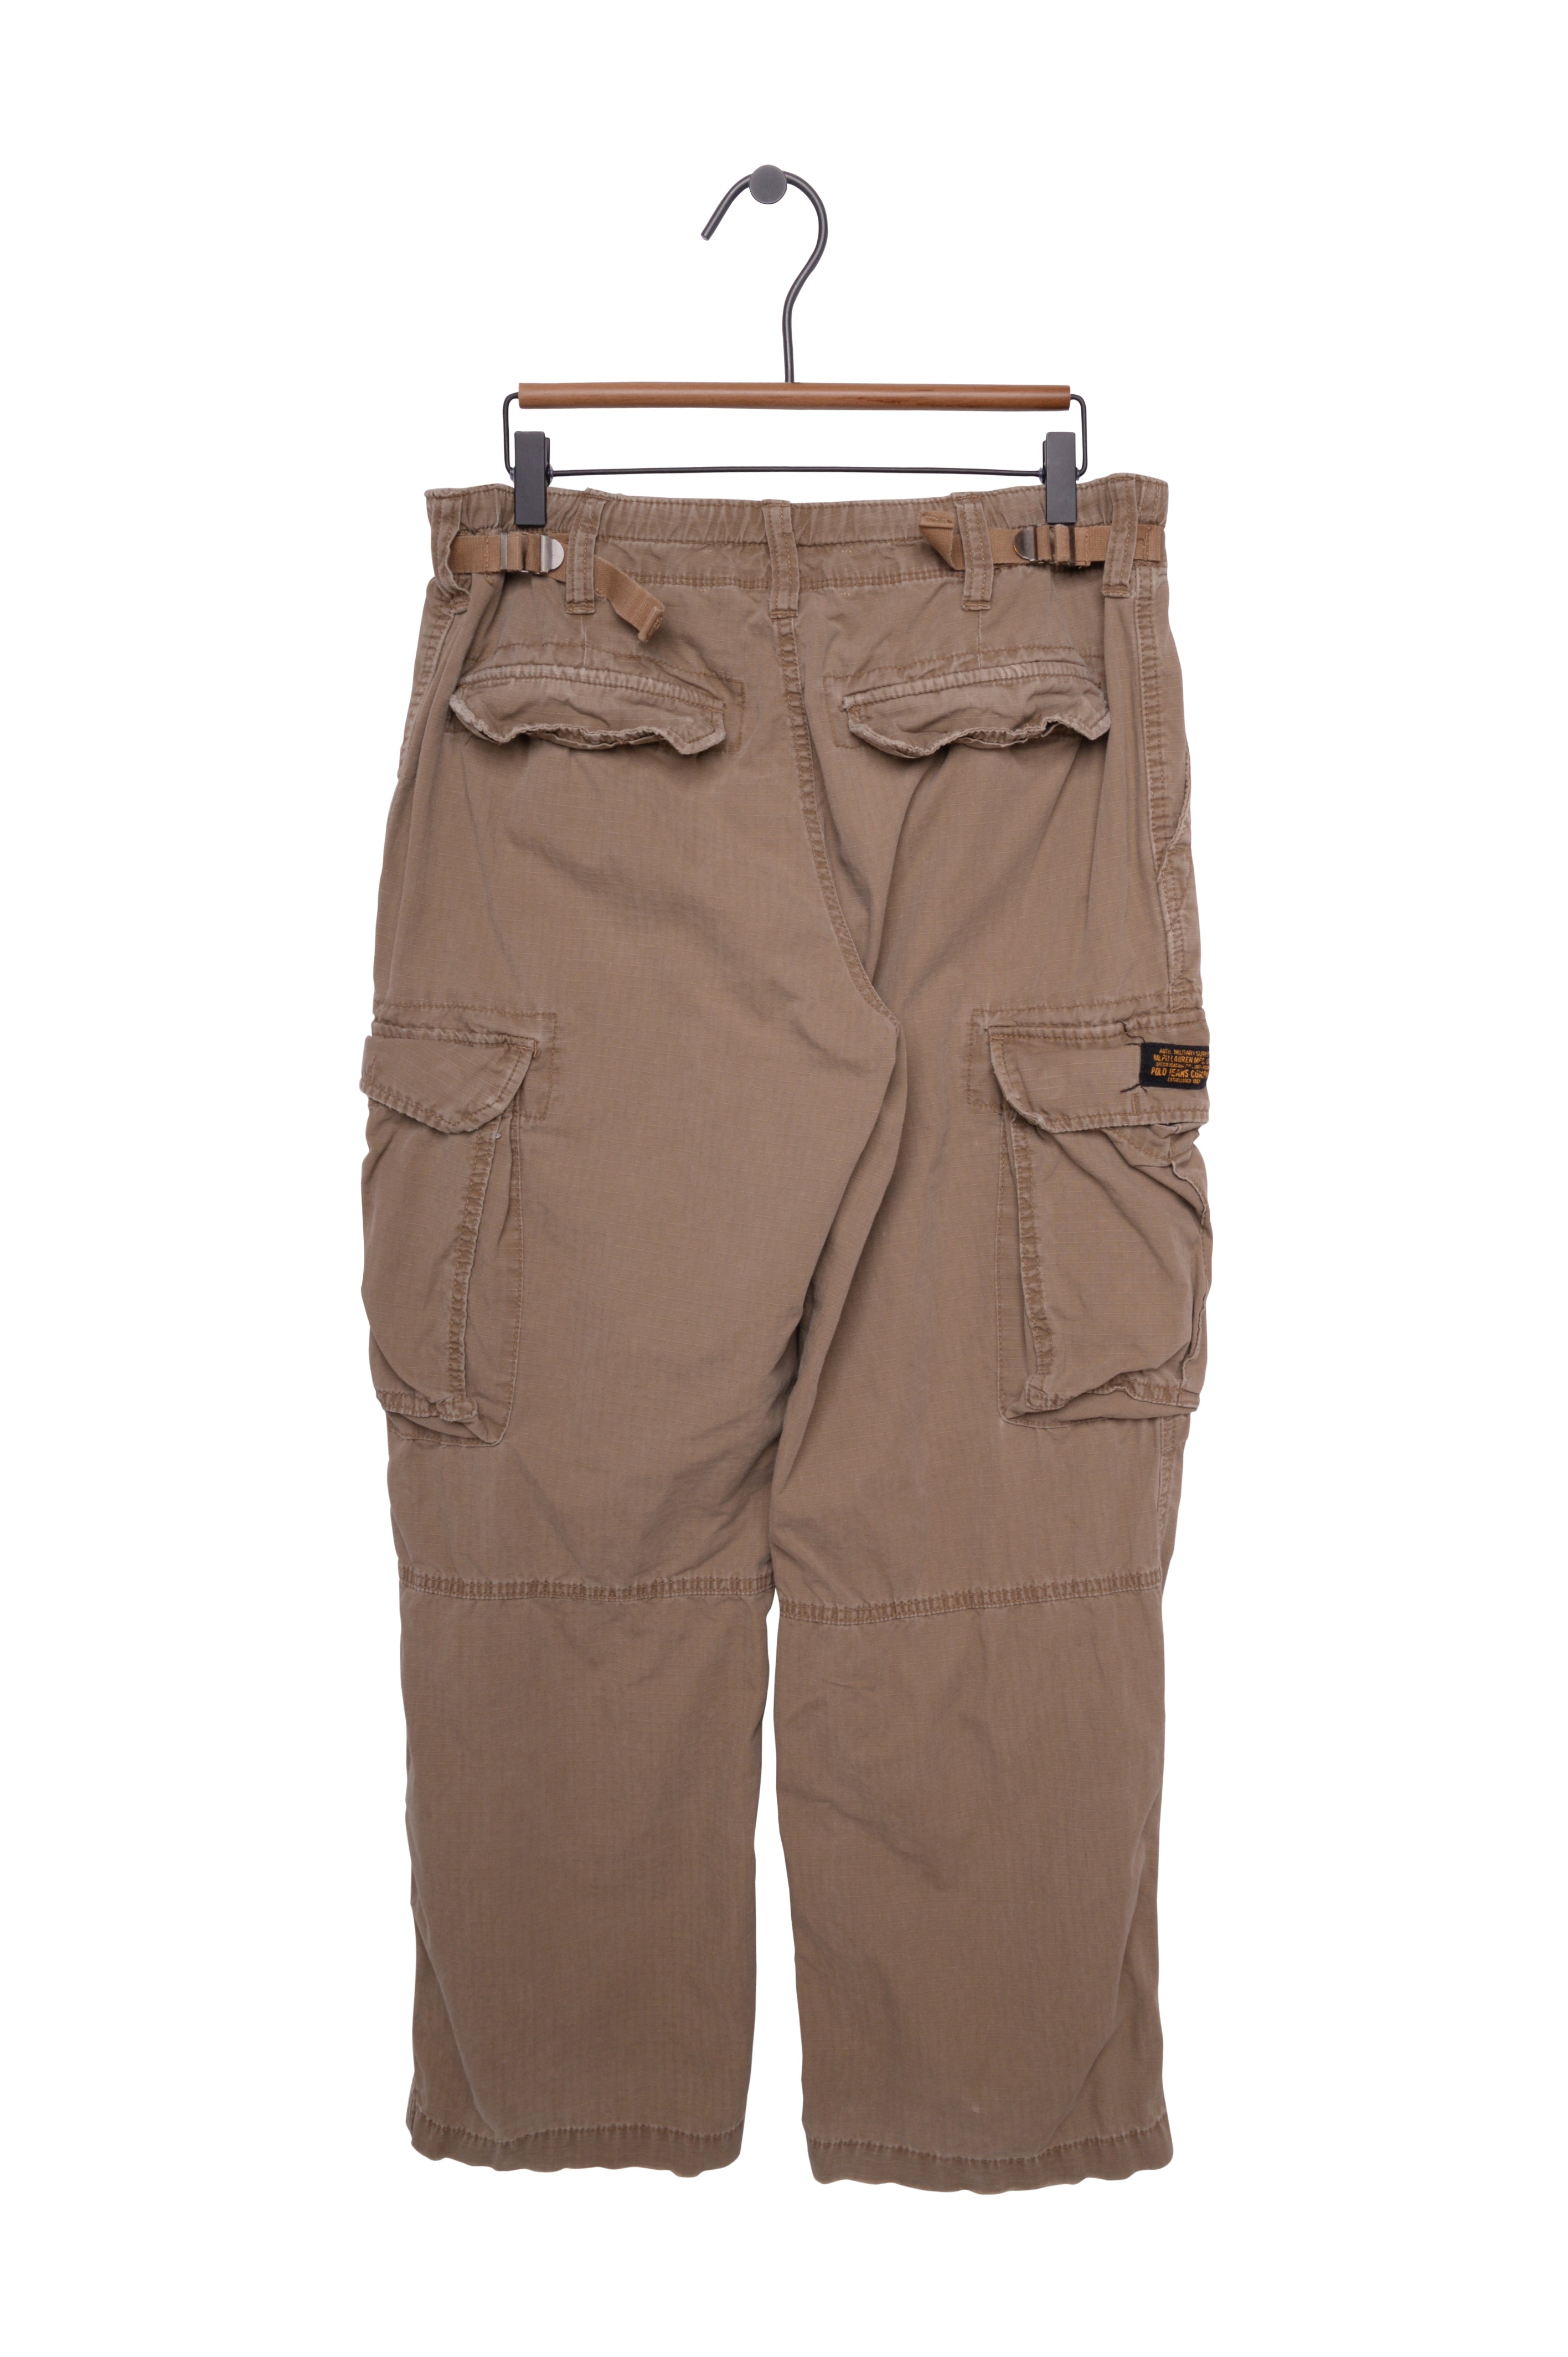 90s Polo Ralph Lauren Military Inspired Cargo Pants (34x30